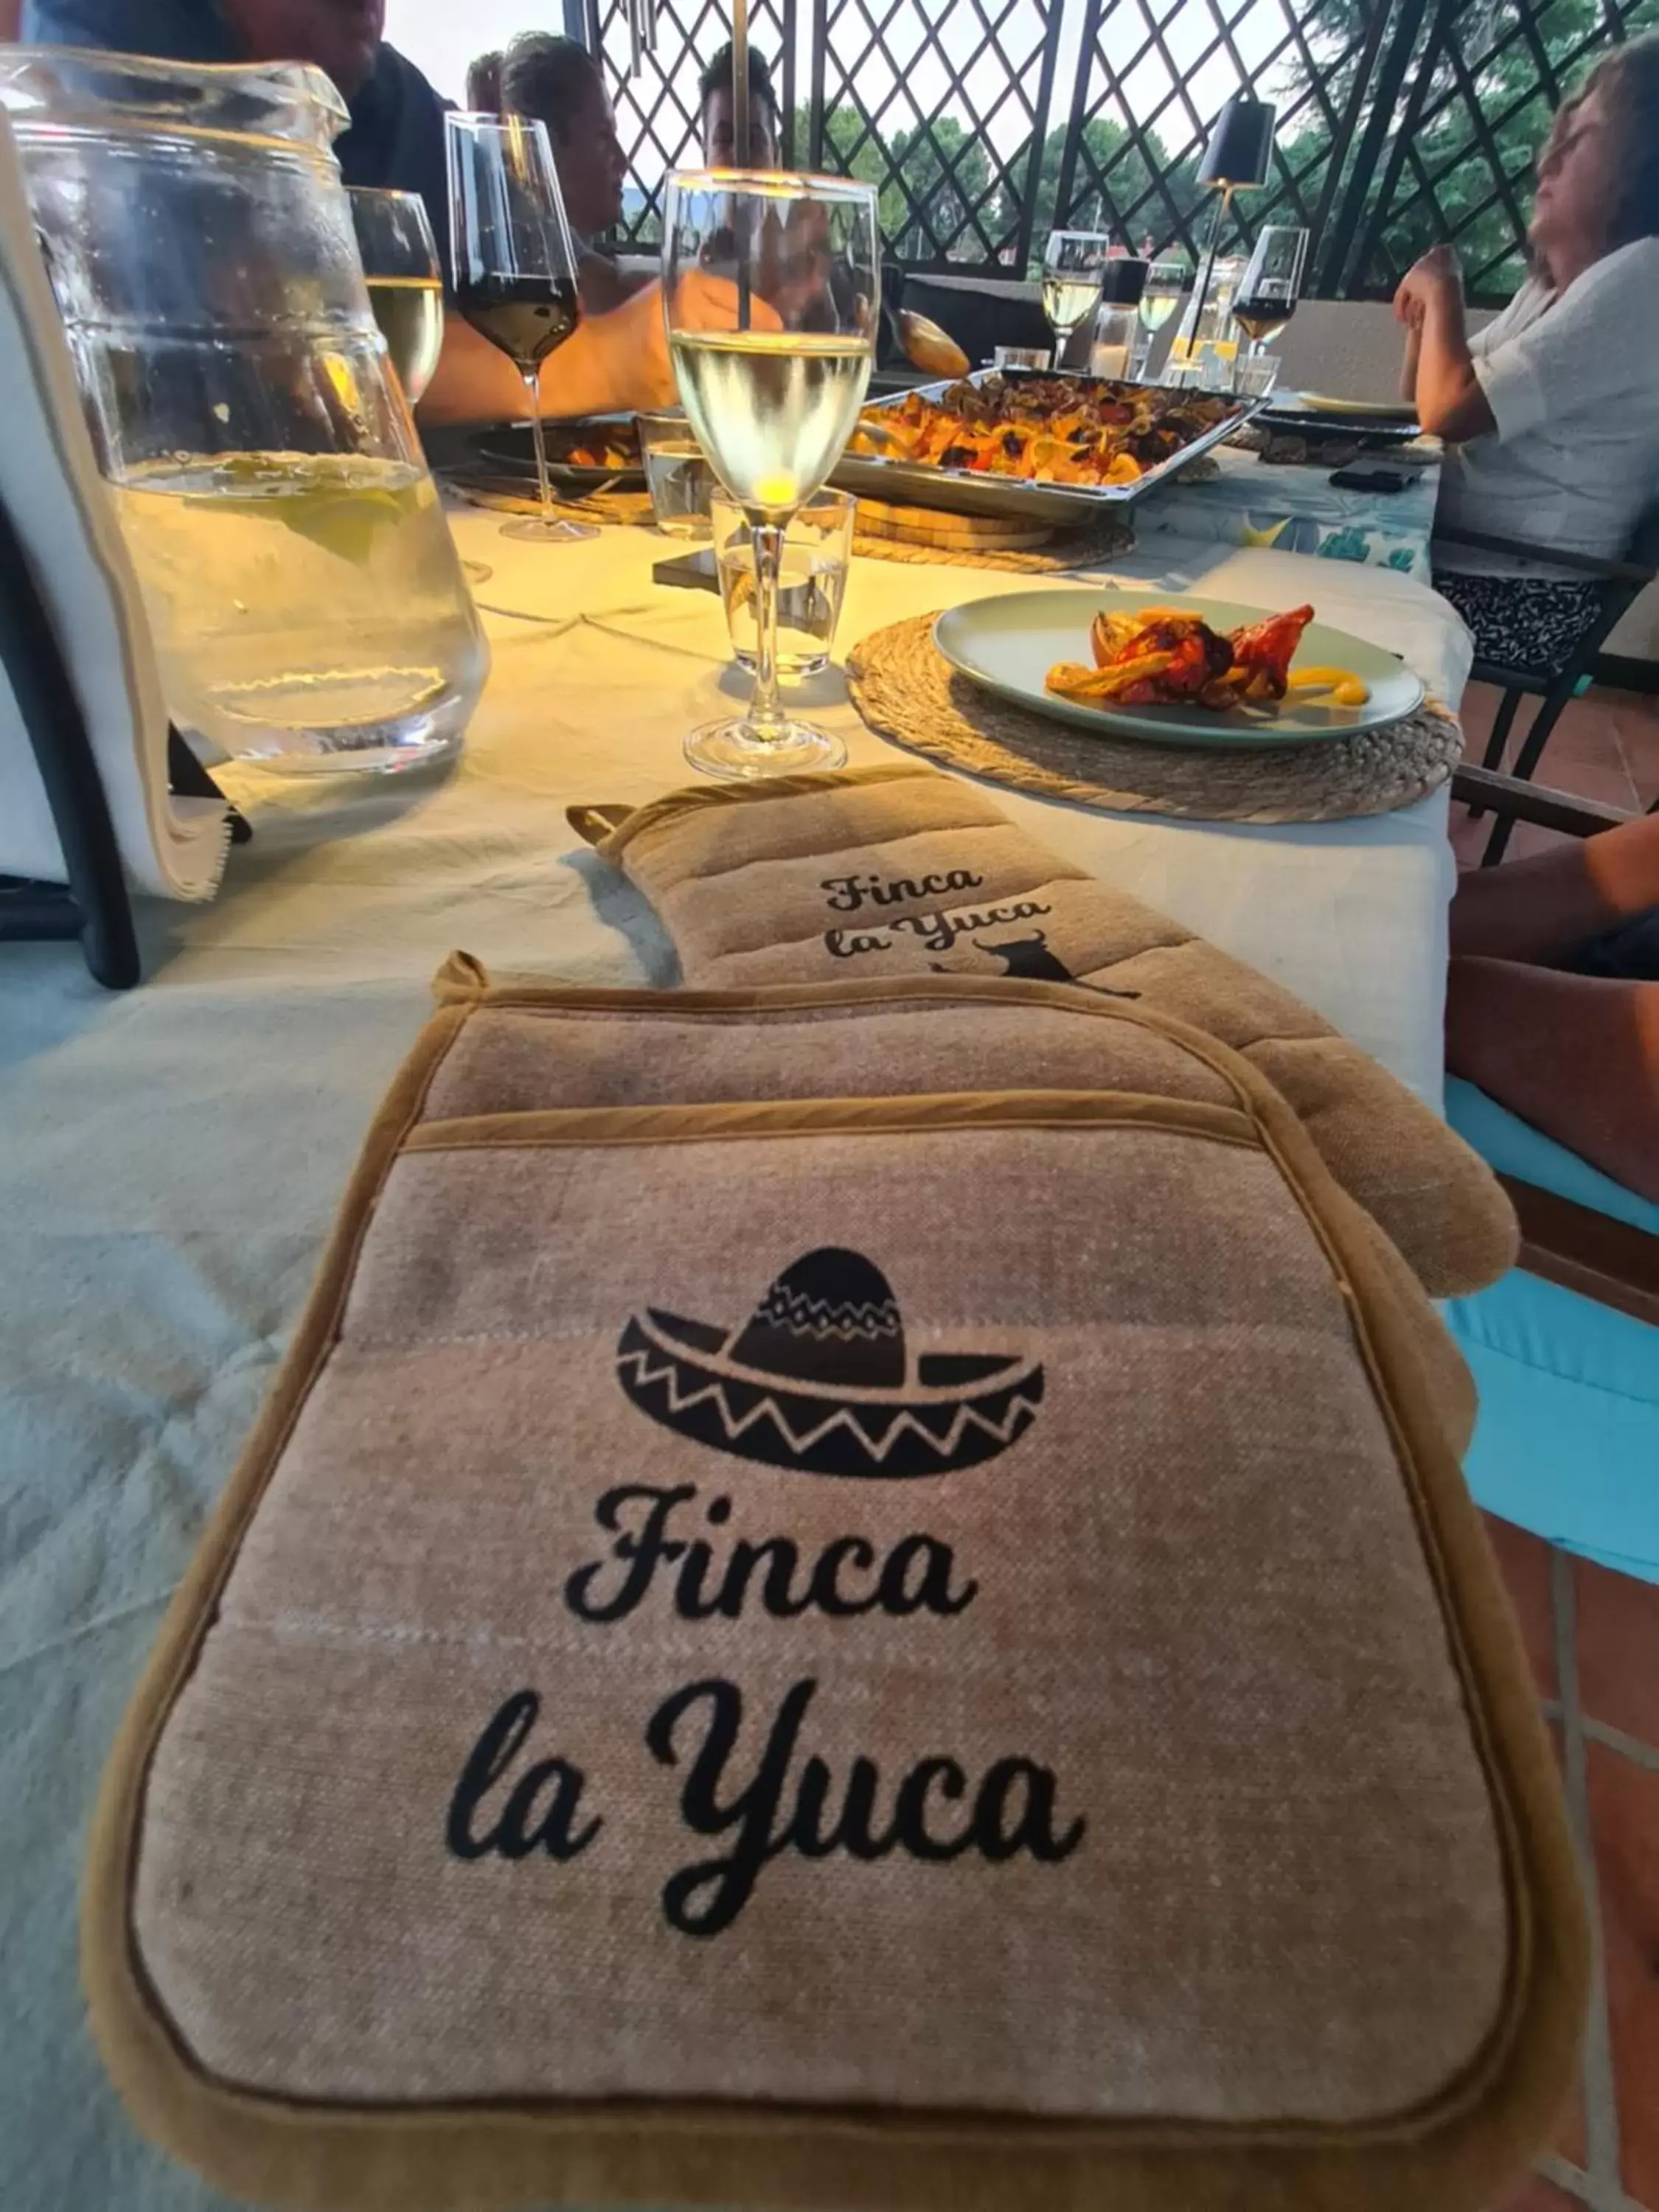 Food and drinks in Finca la Yuca